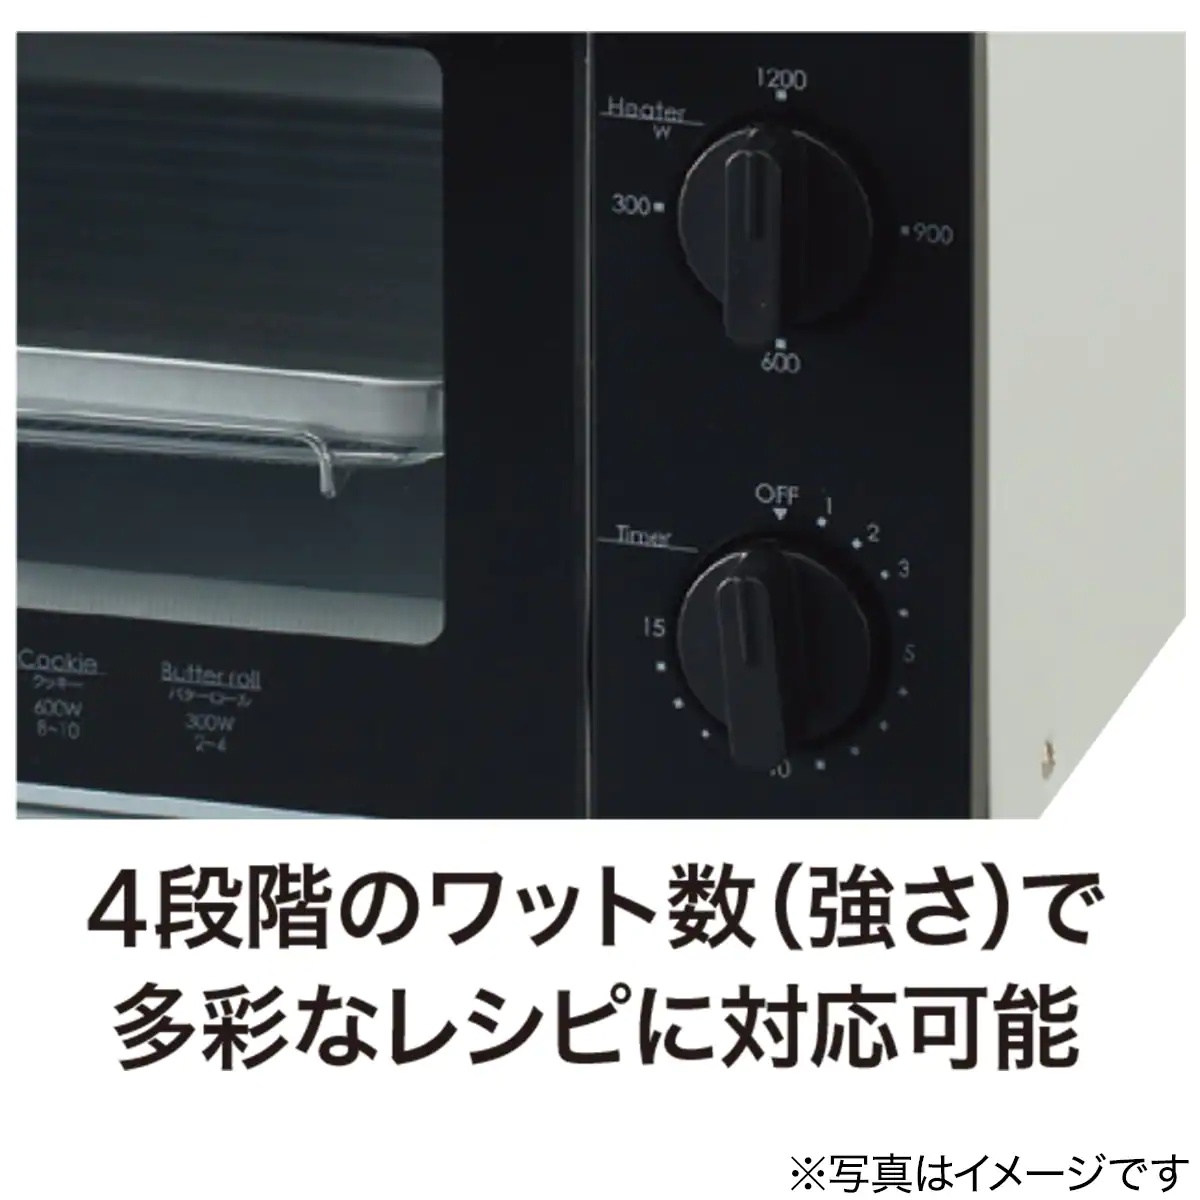 NITORI(ニトリ) オーブントースターMG12CKDの商品画像サムネ4 